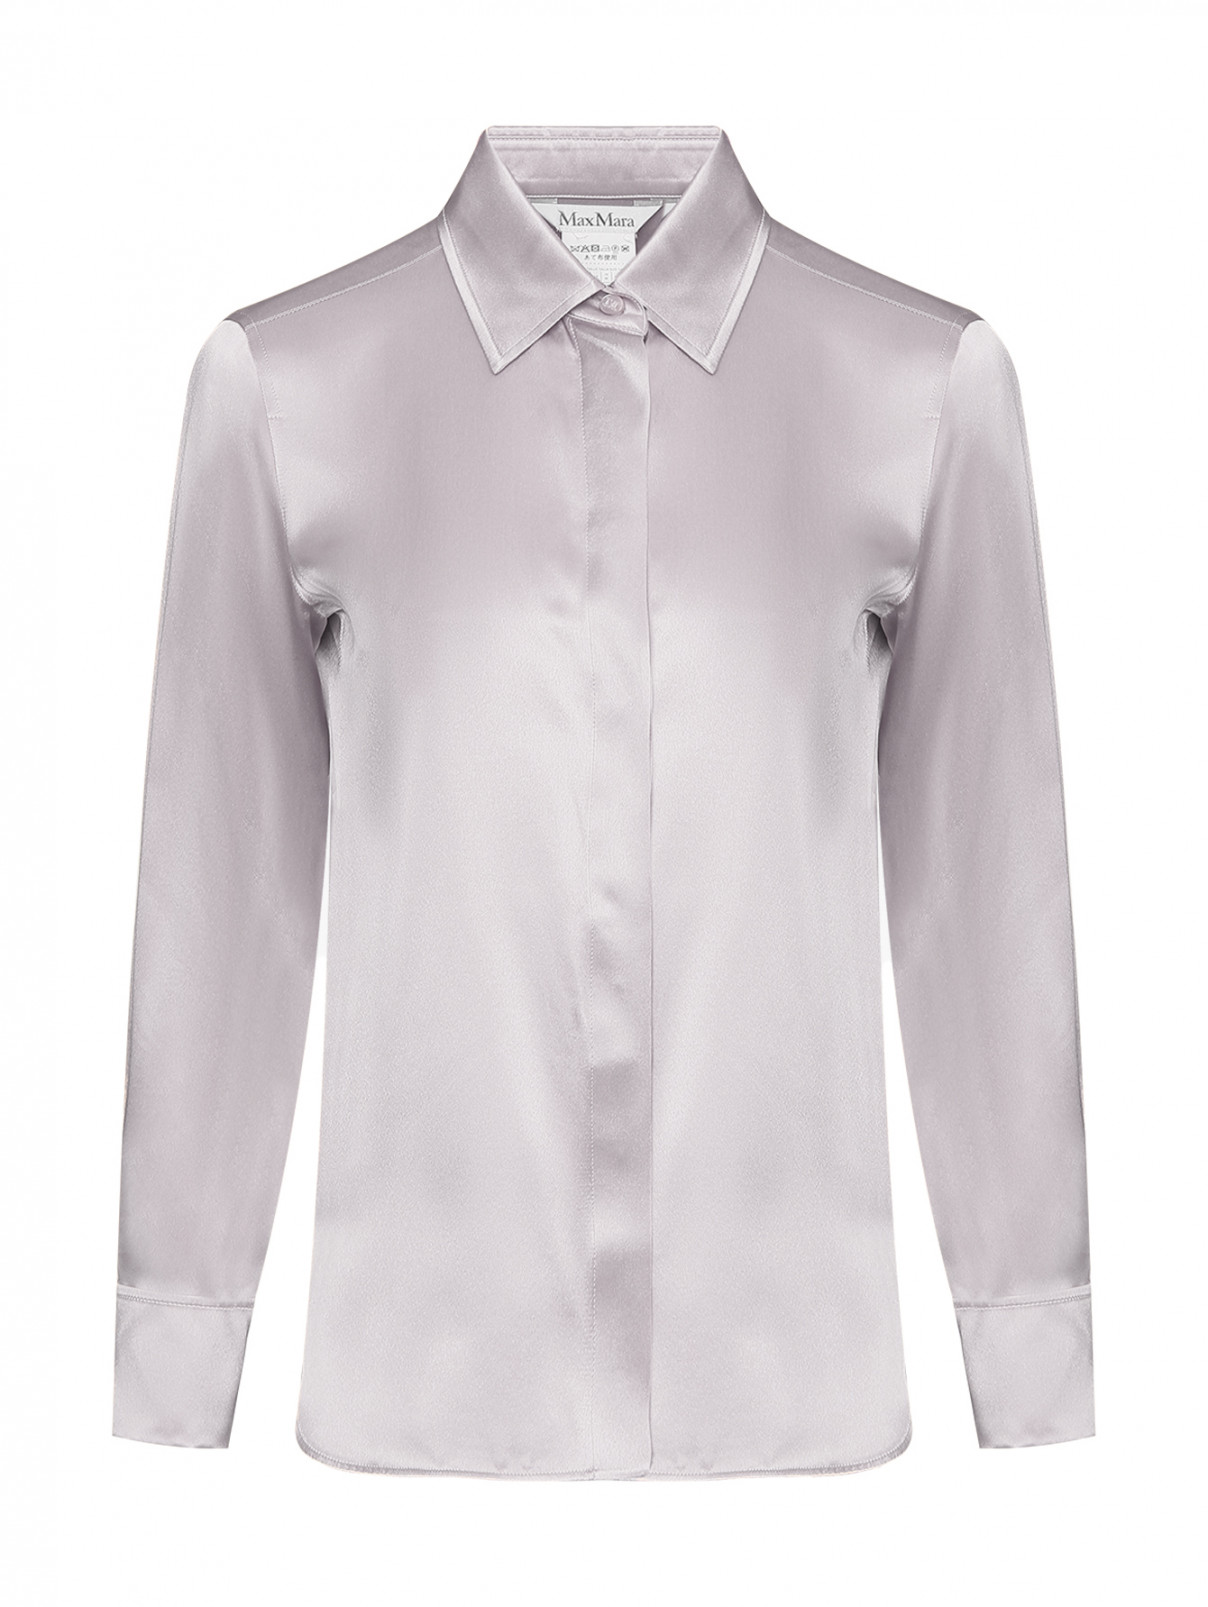 Блуза из шелка на пуговицах Max Mara  –  Общий вид  – Цвет:  Серый